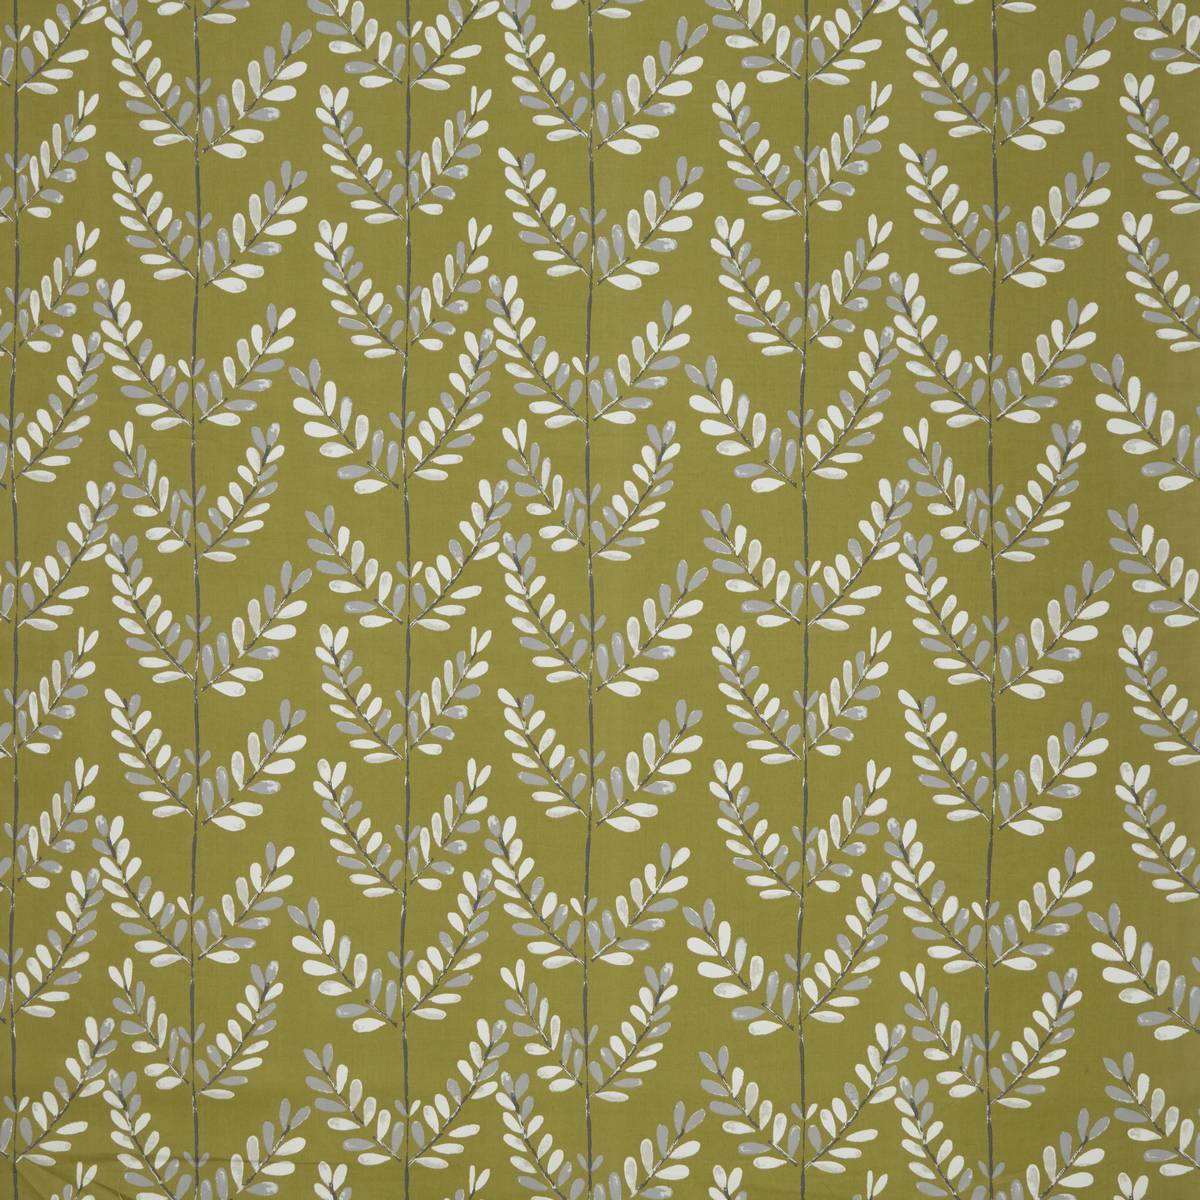 Scandi Sprig Kiwi Fabric by iLiv